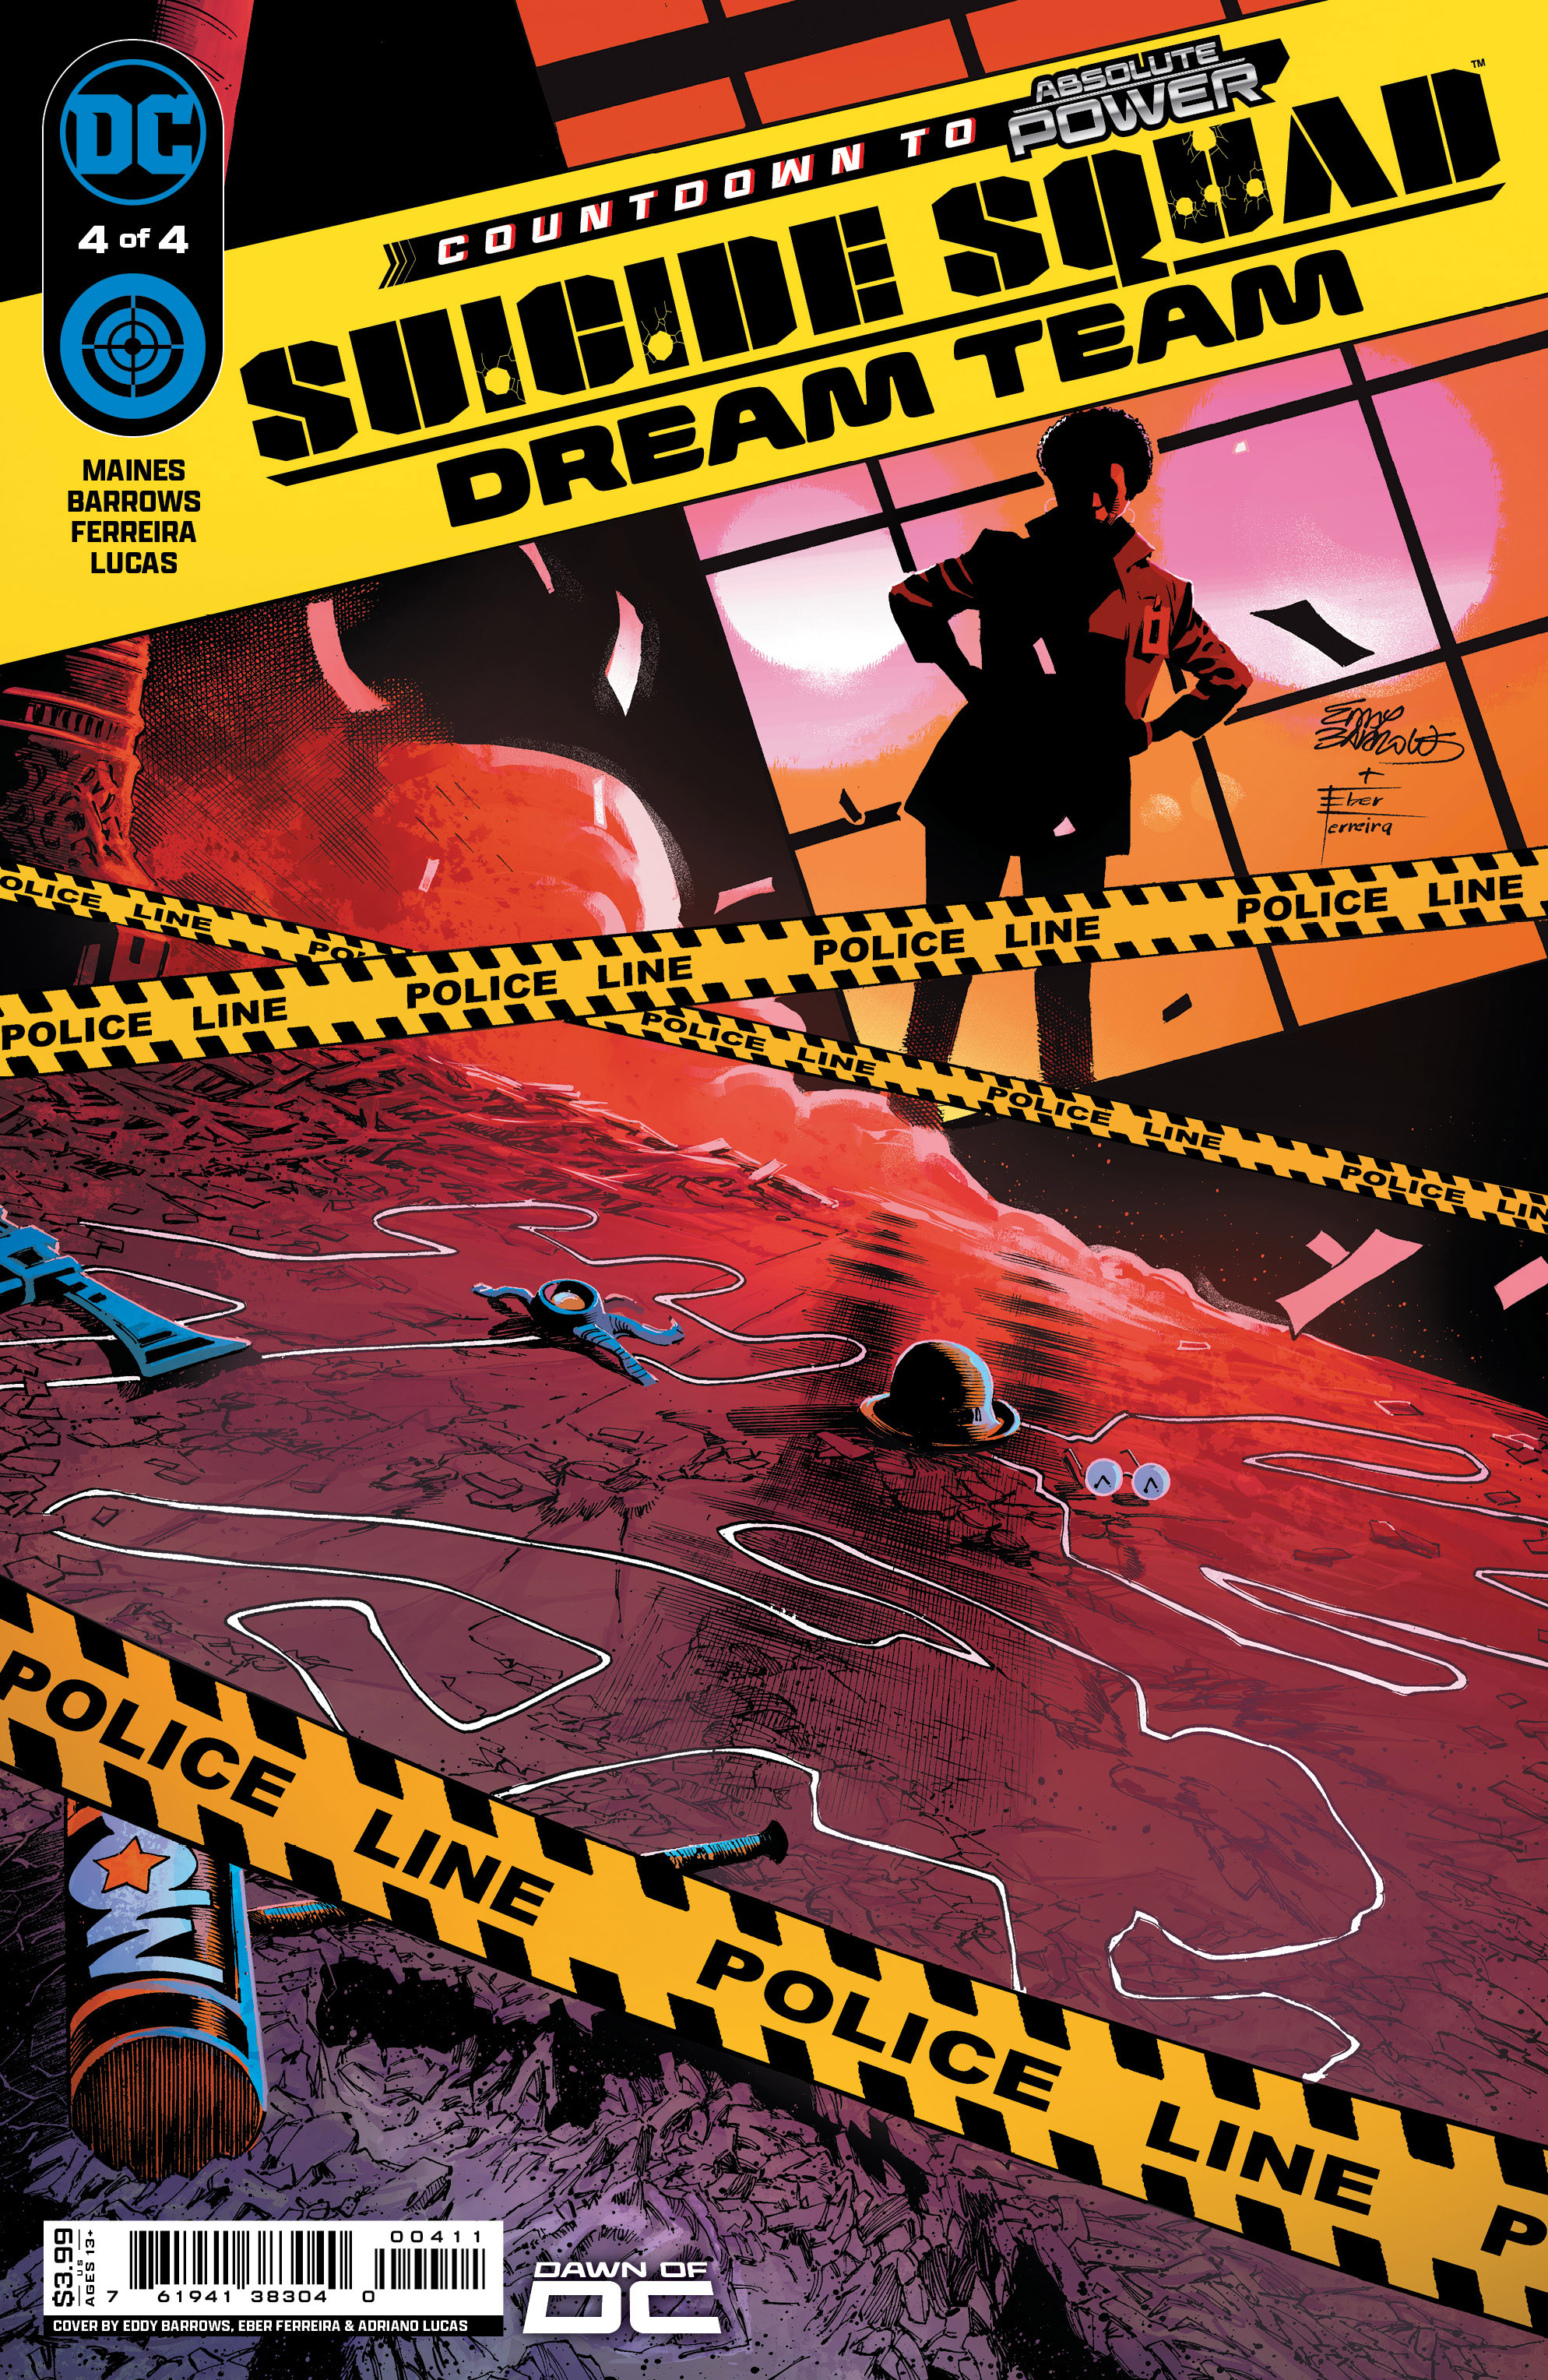 Suicide Squad Dream Team #4 Cover A Eddy Barrows & Eber Ferreira (Absolute Power) (Of 4)